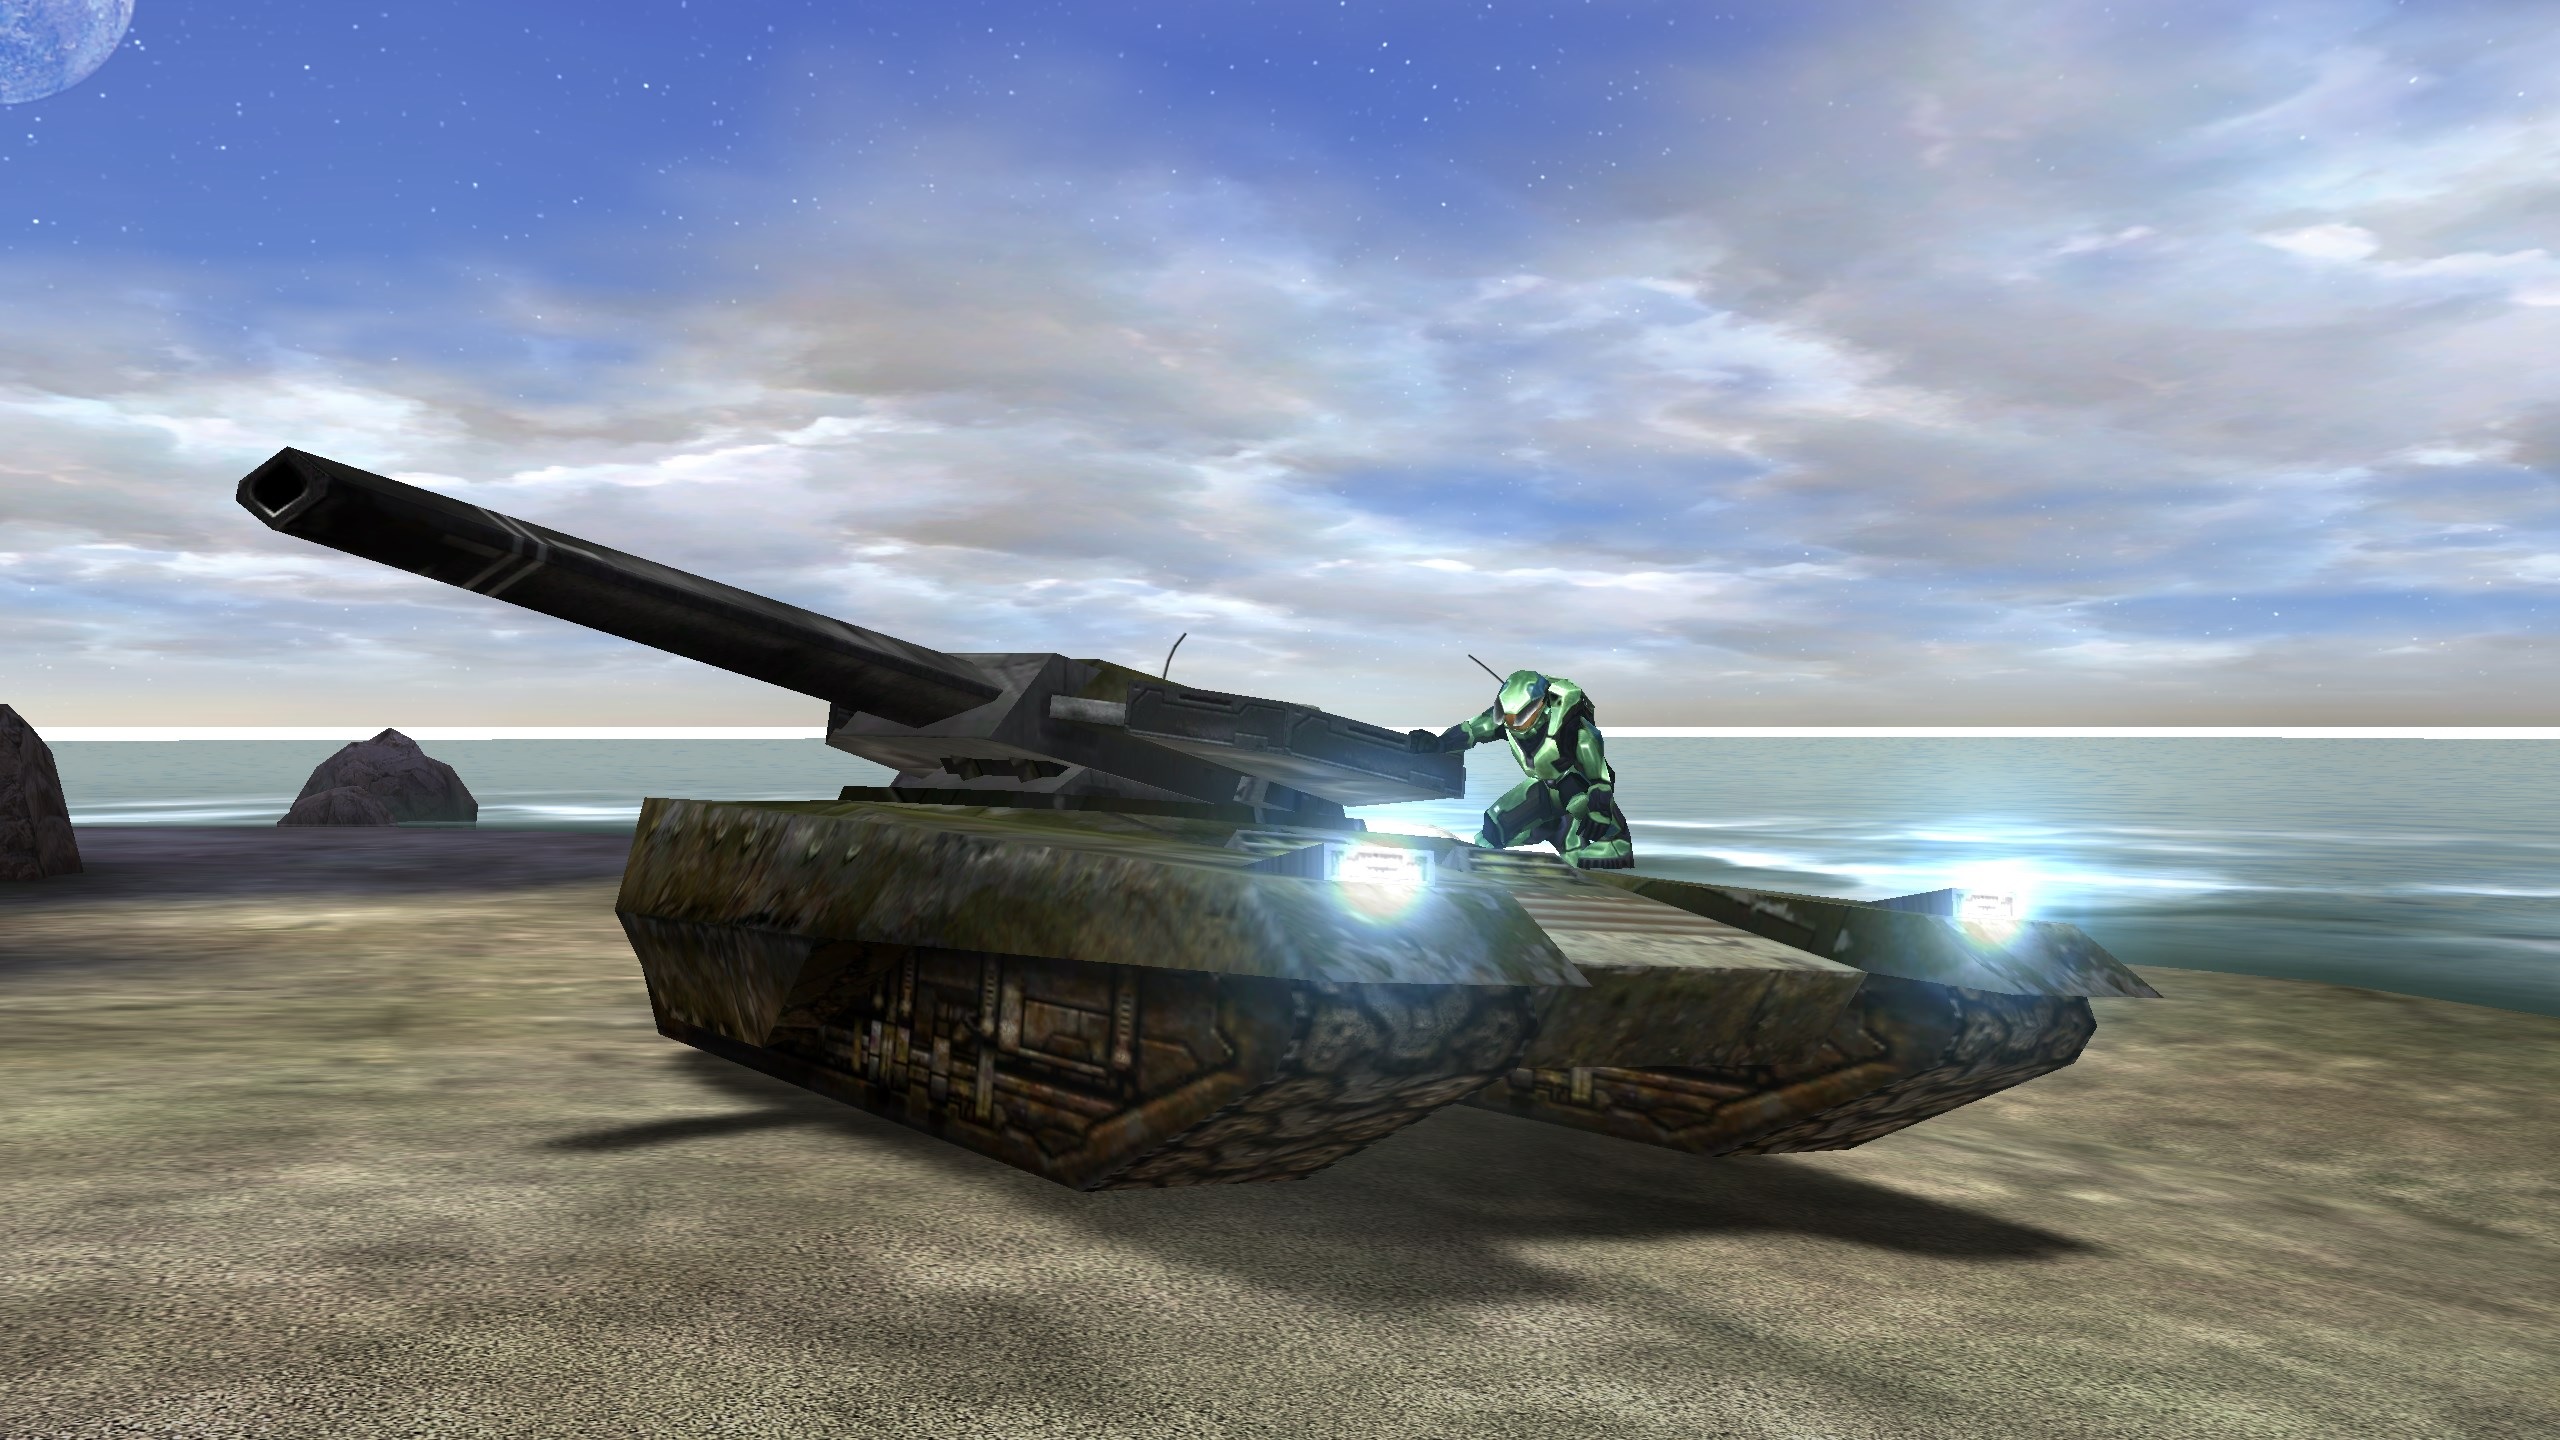 Halo CE shot of restored Viper stealth tank